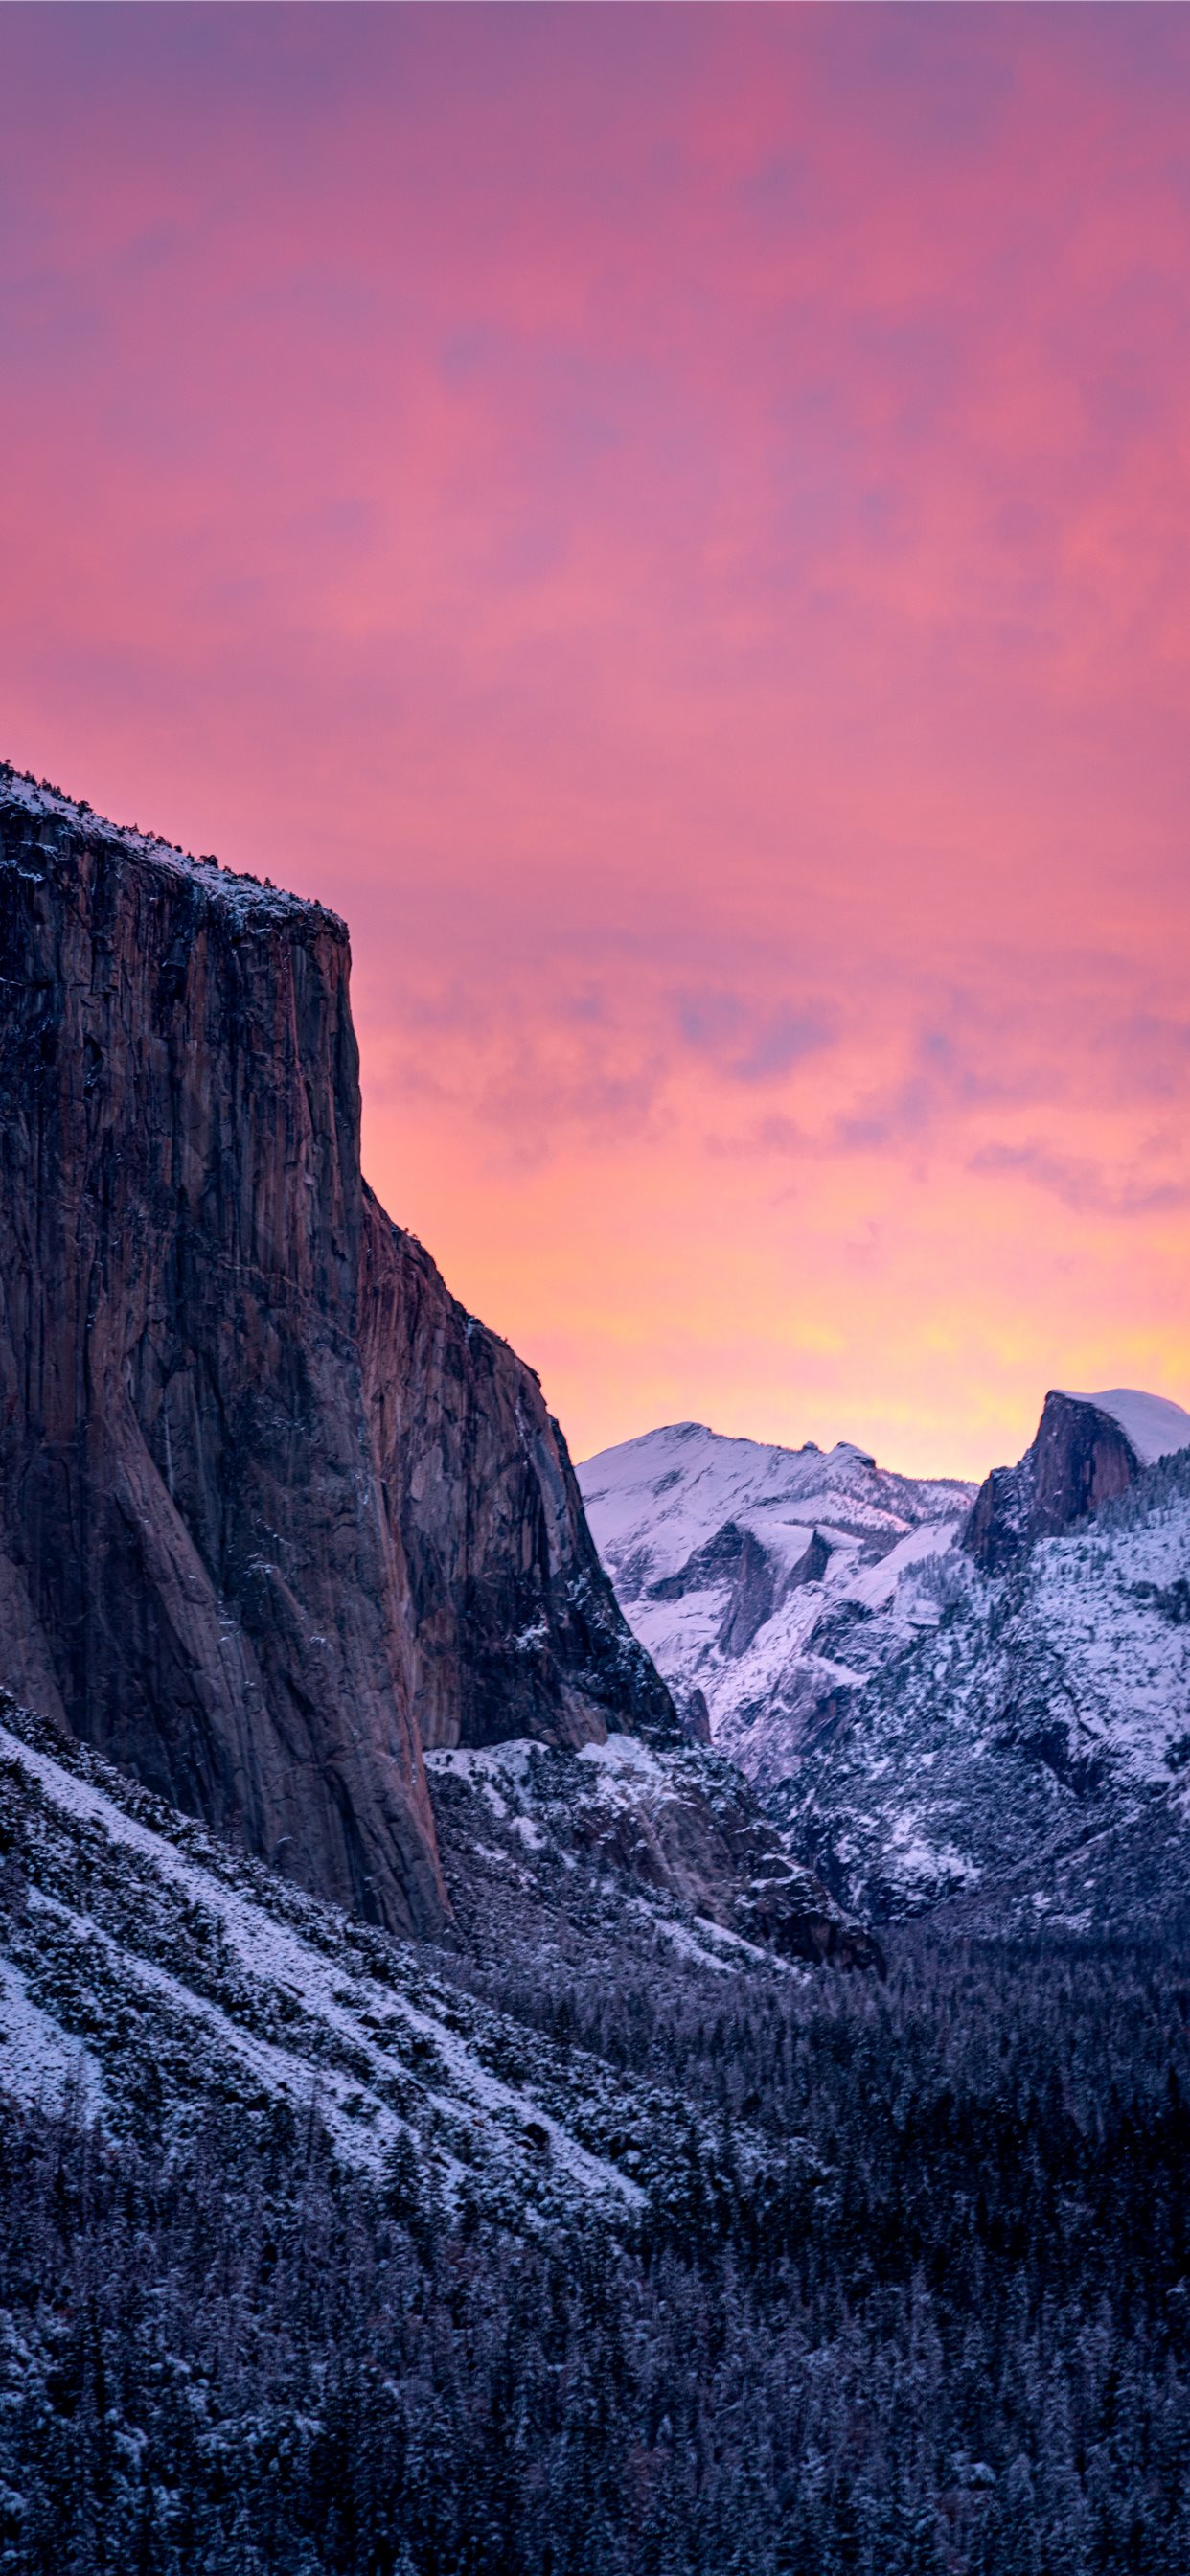 Winter Sunrise in Yosemite iPhone X Wallpaper Free Download